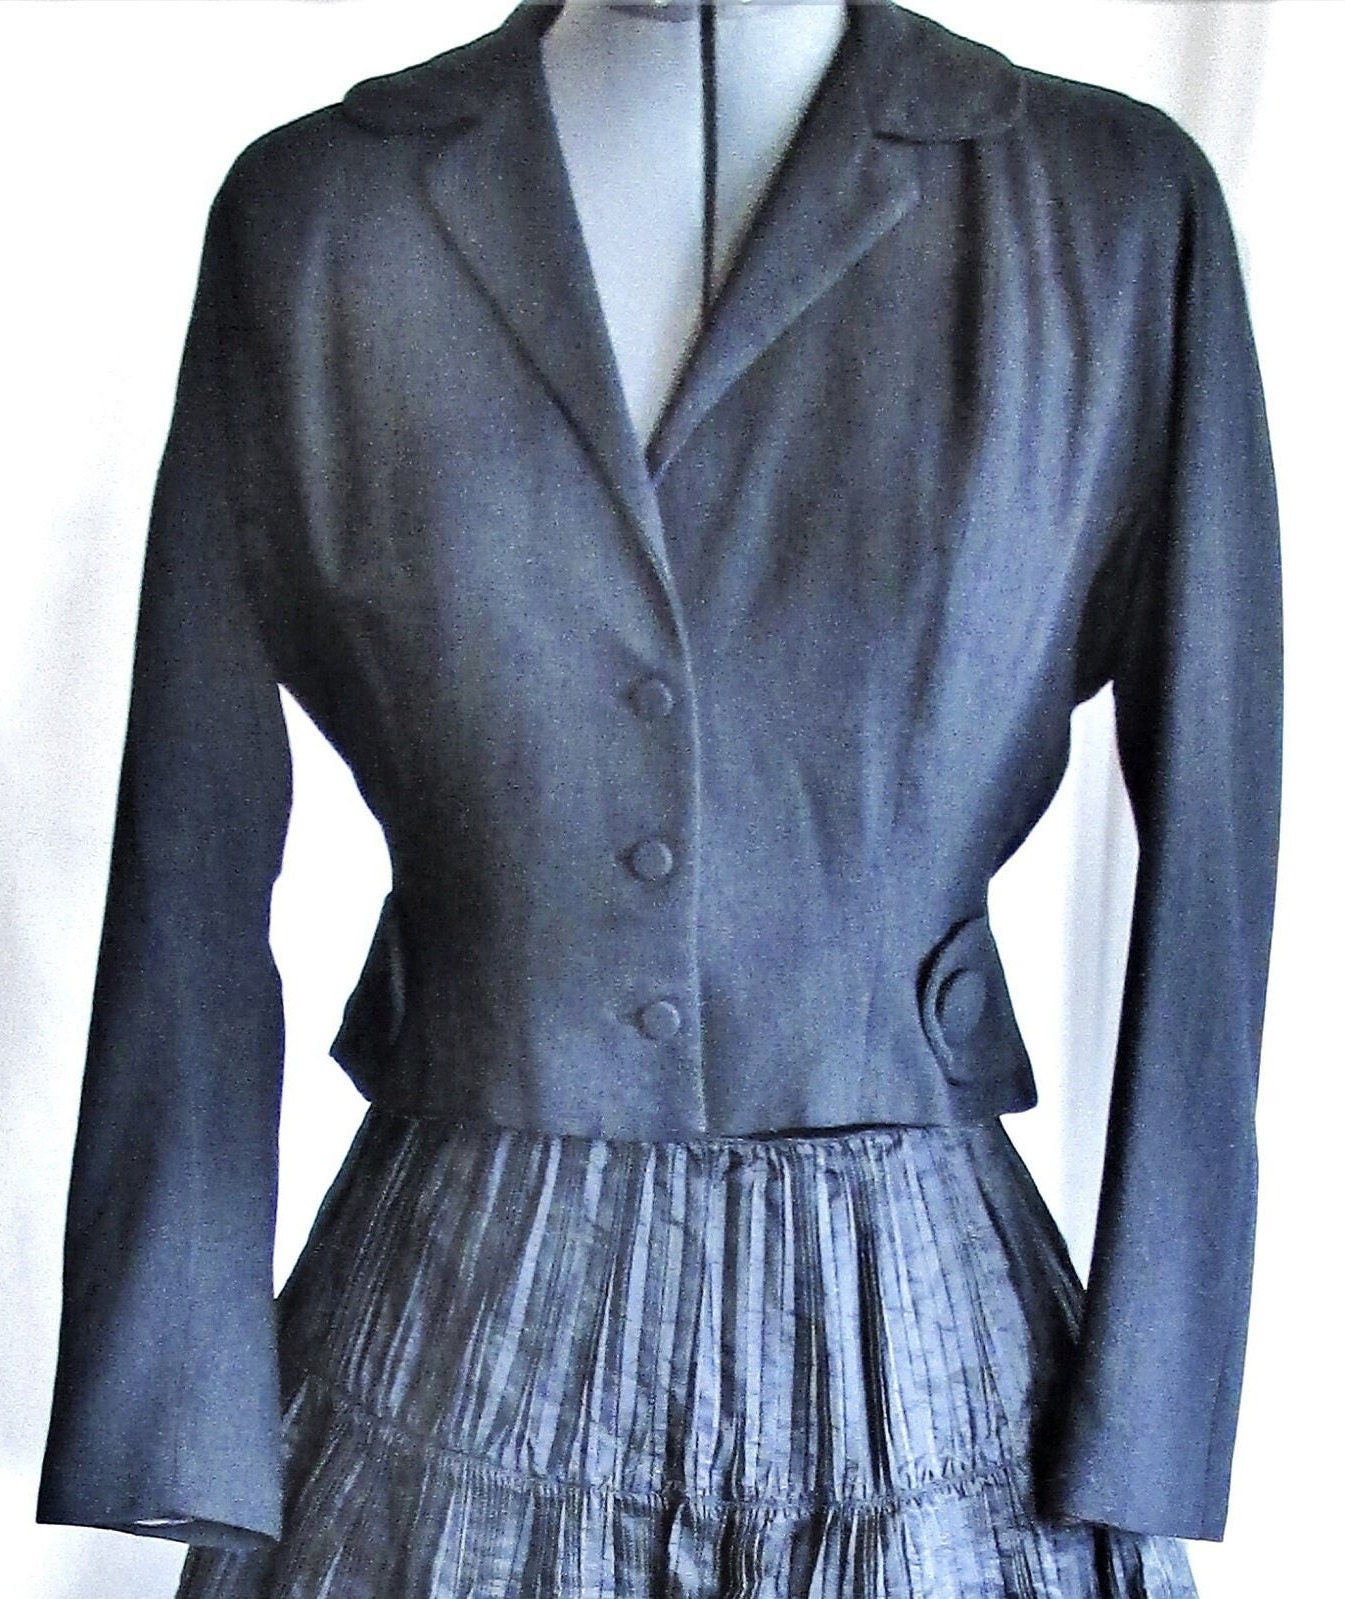 Real Vintage Search Engine Vintage 1940s 50s Jacket Black Wool Ladies Fitted Suit Coat 3 Button Cropped Long Sleeve Berkley La Mode Scroll Down For Details $49.00 AT vintagedancer.com